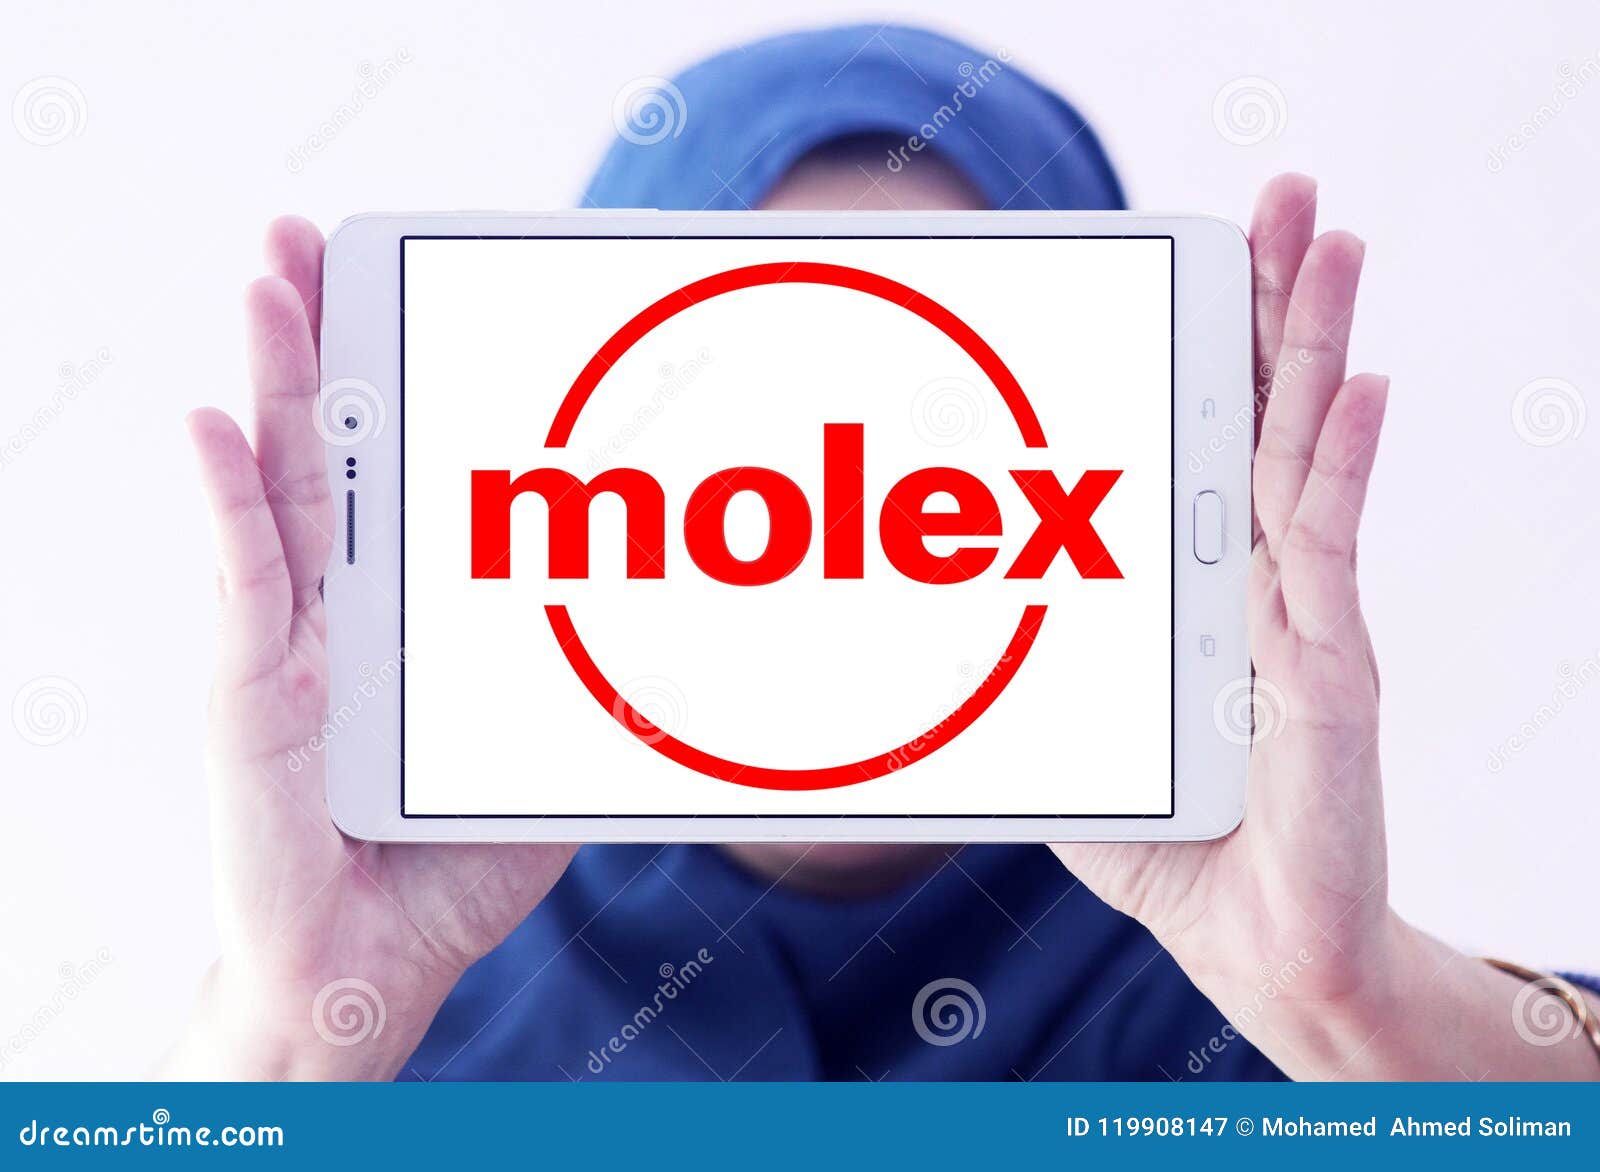 Molex Presents Distributor of the Year Award